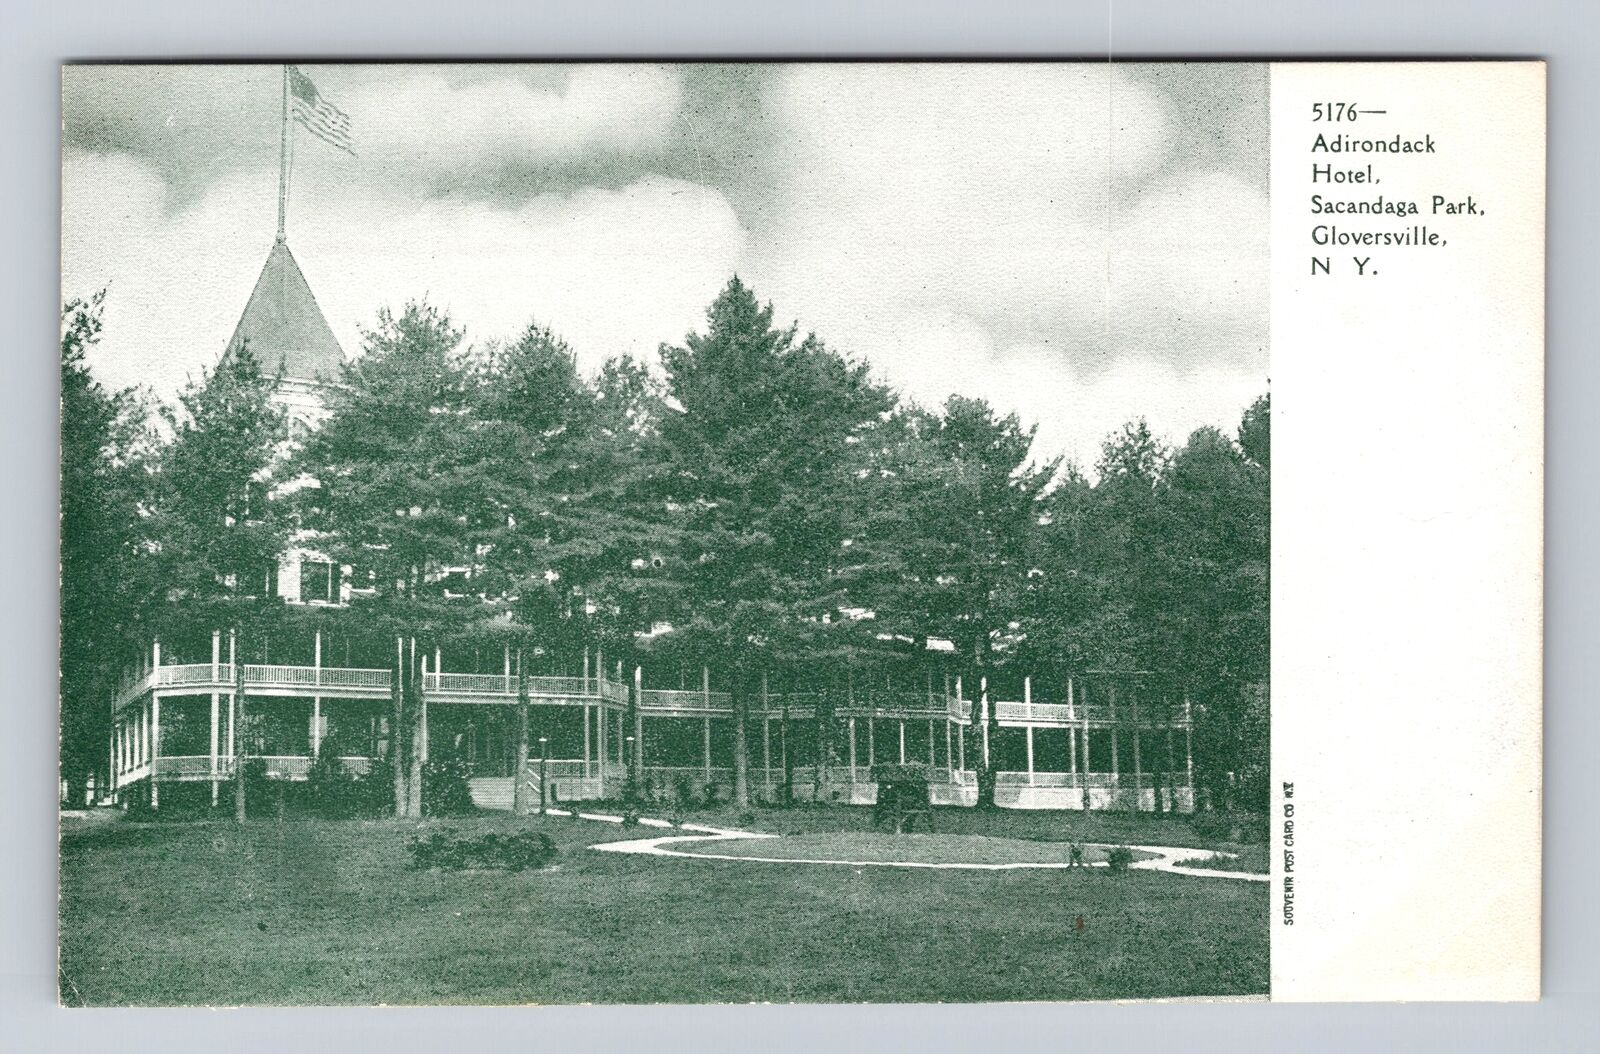 Gloversville NY-New York, Adirondack Hotel, Sacandaga Park, Vintage Postcard